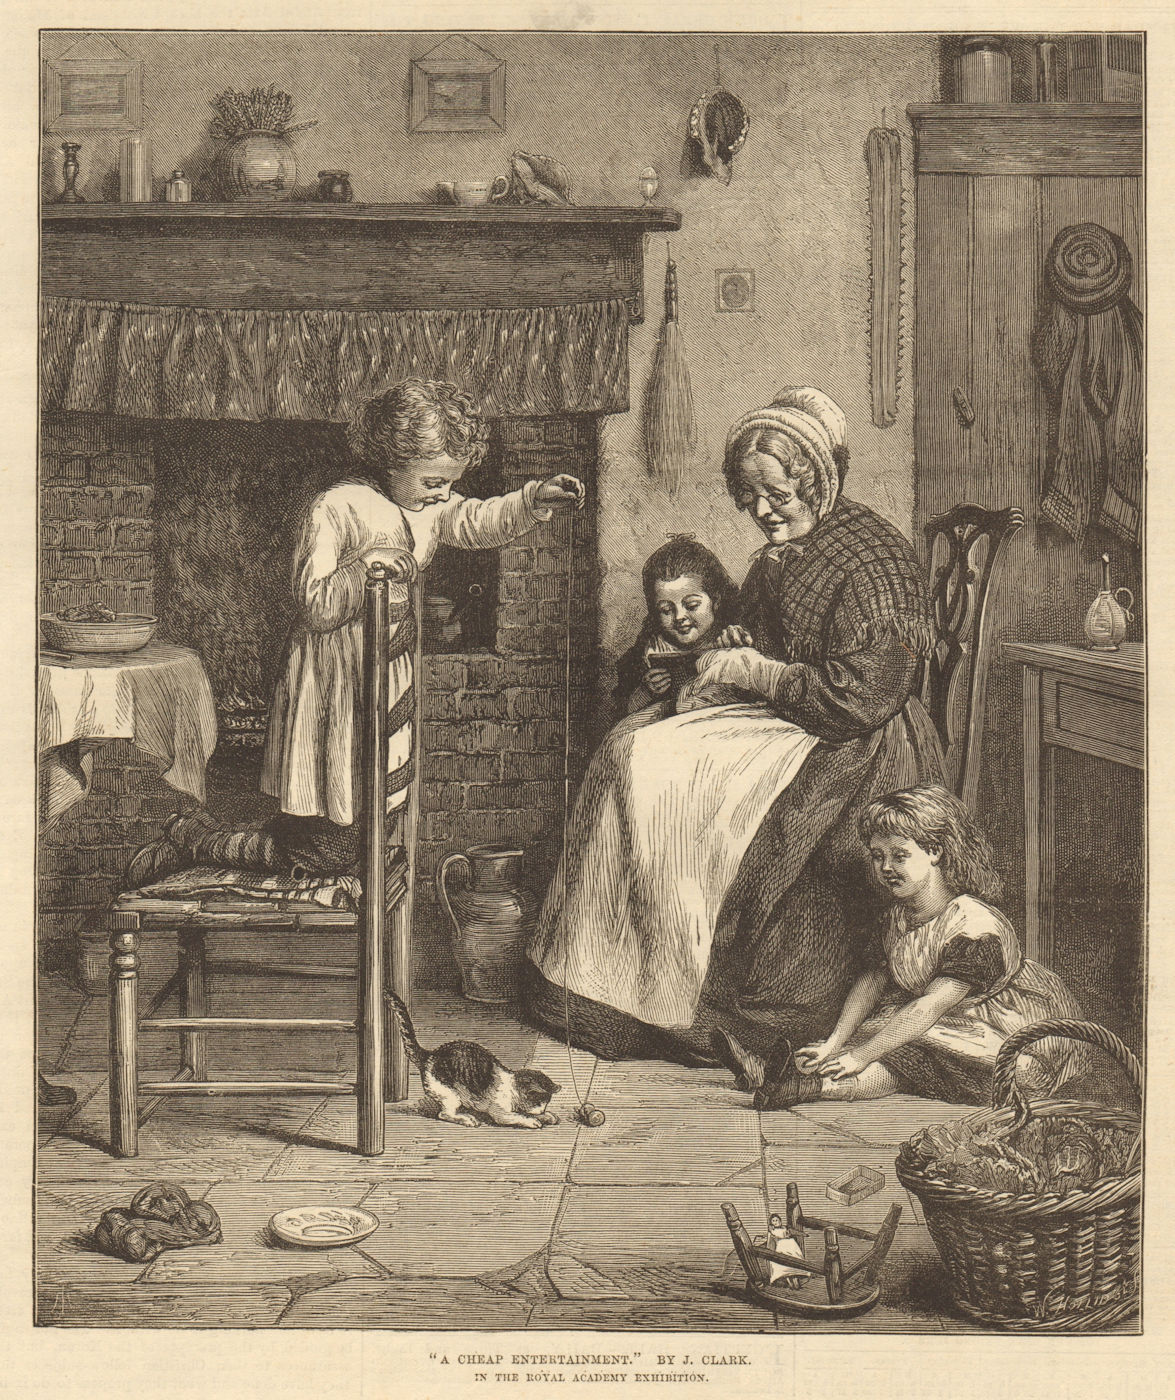 "A cheap entertainment", by J. Clark. Family. Cats Kitten & thread 1876 print